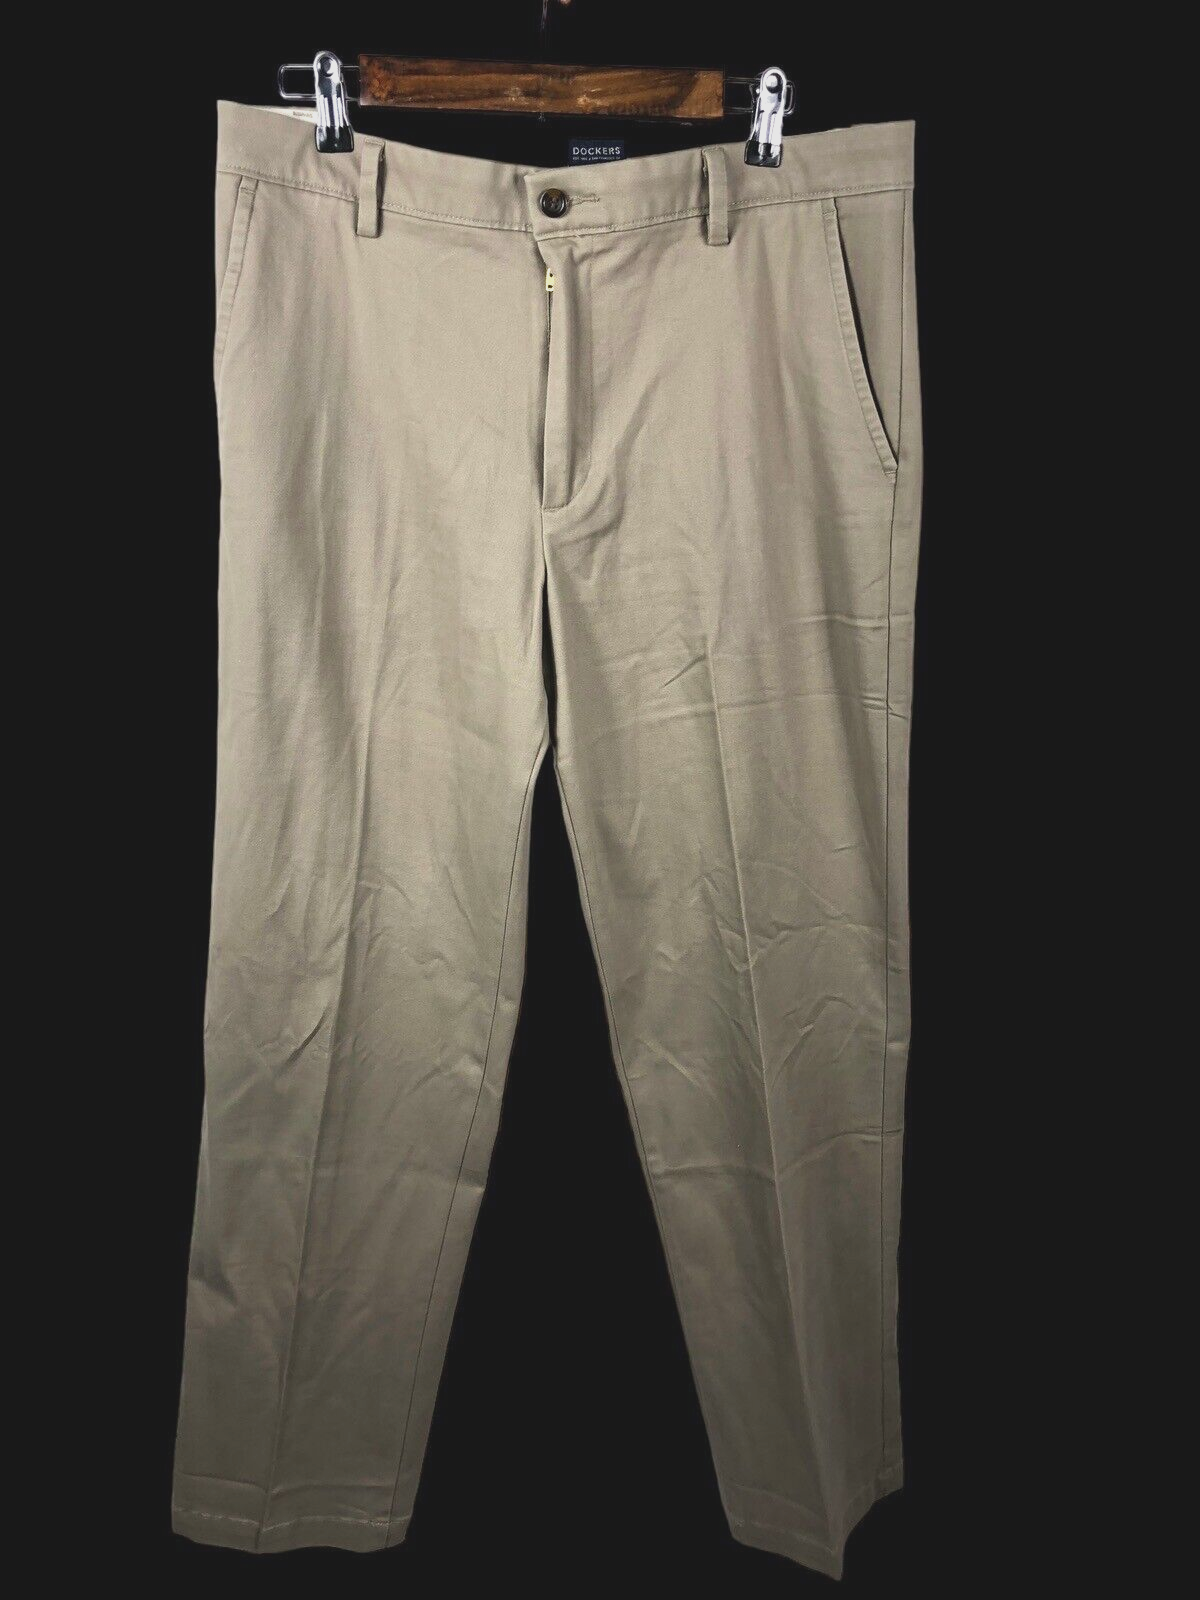 Primary image for Dockers Classic Fit 34x34 Dress Pants Trousers Smart 360 Flex Mens Tan Khakis